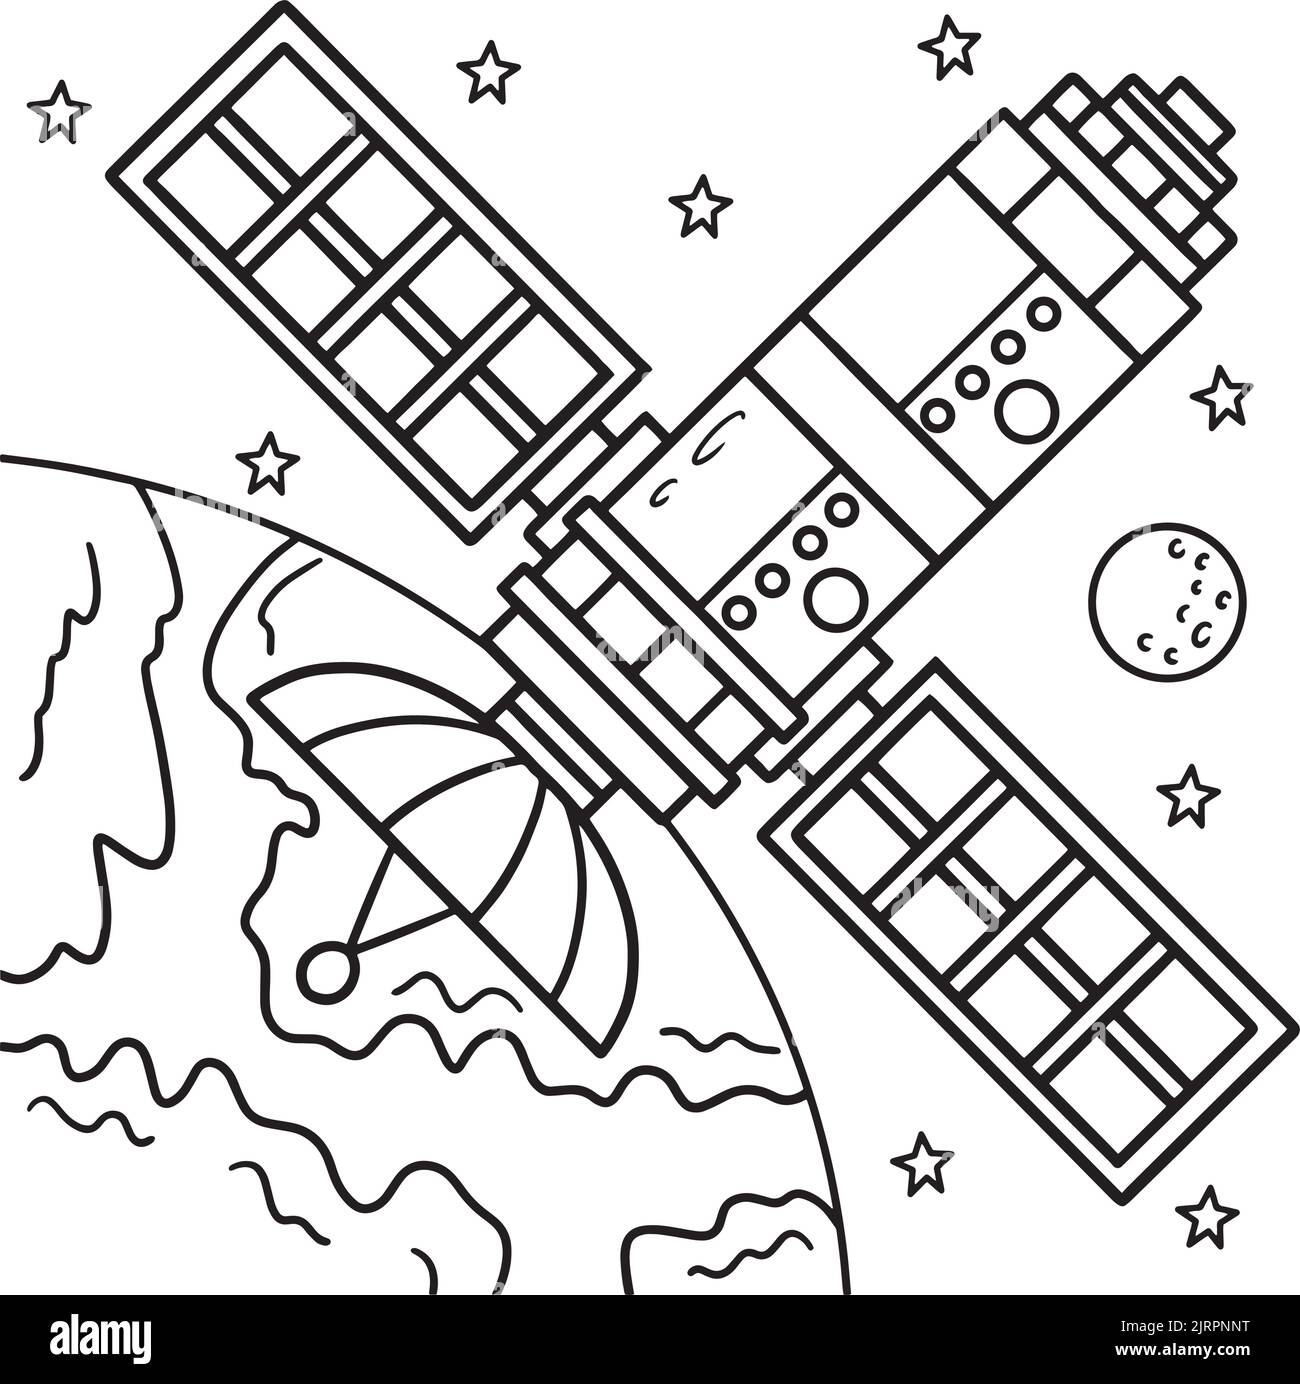 Space Satellite Coloring Page für Kinder Stock Vektor